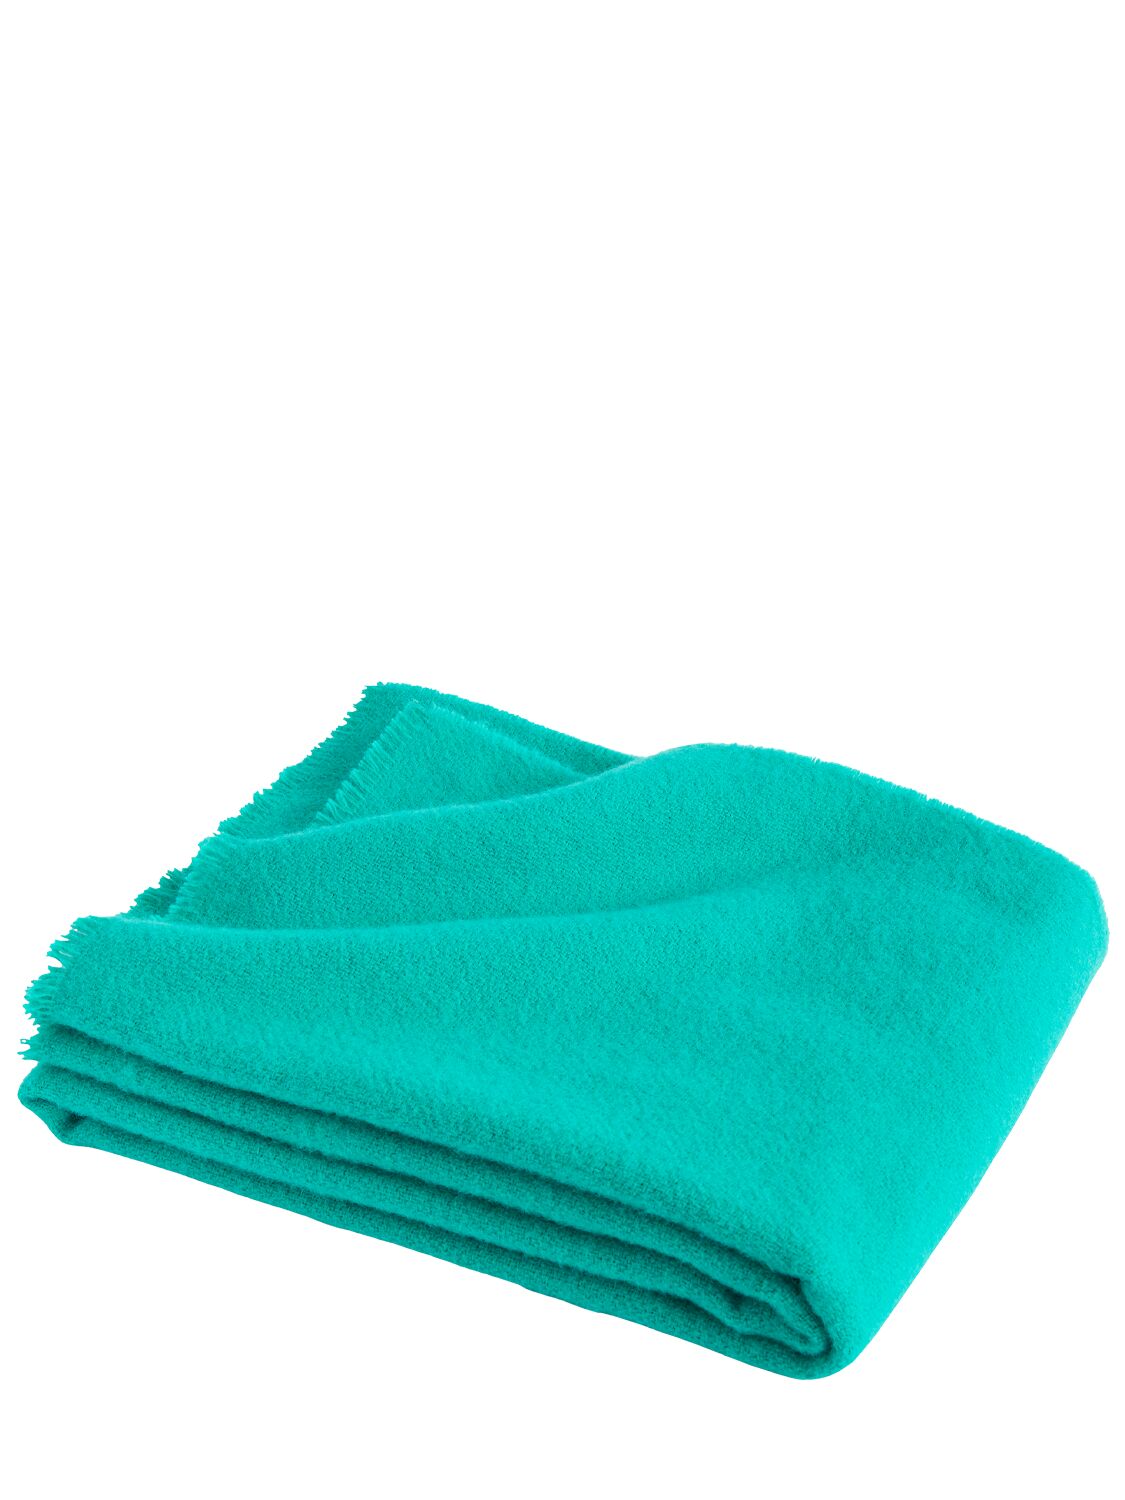 Image of Aqua Green Mono Blanket